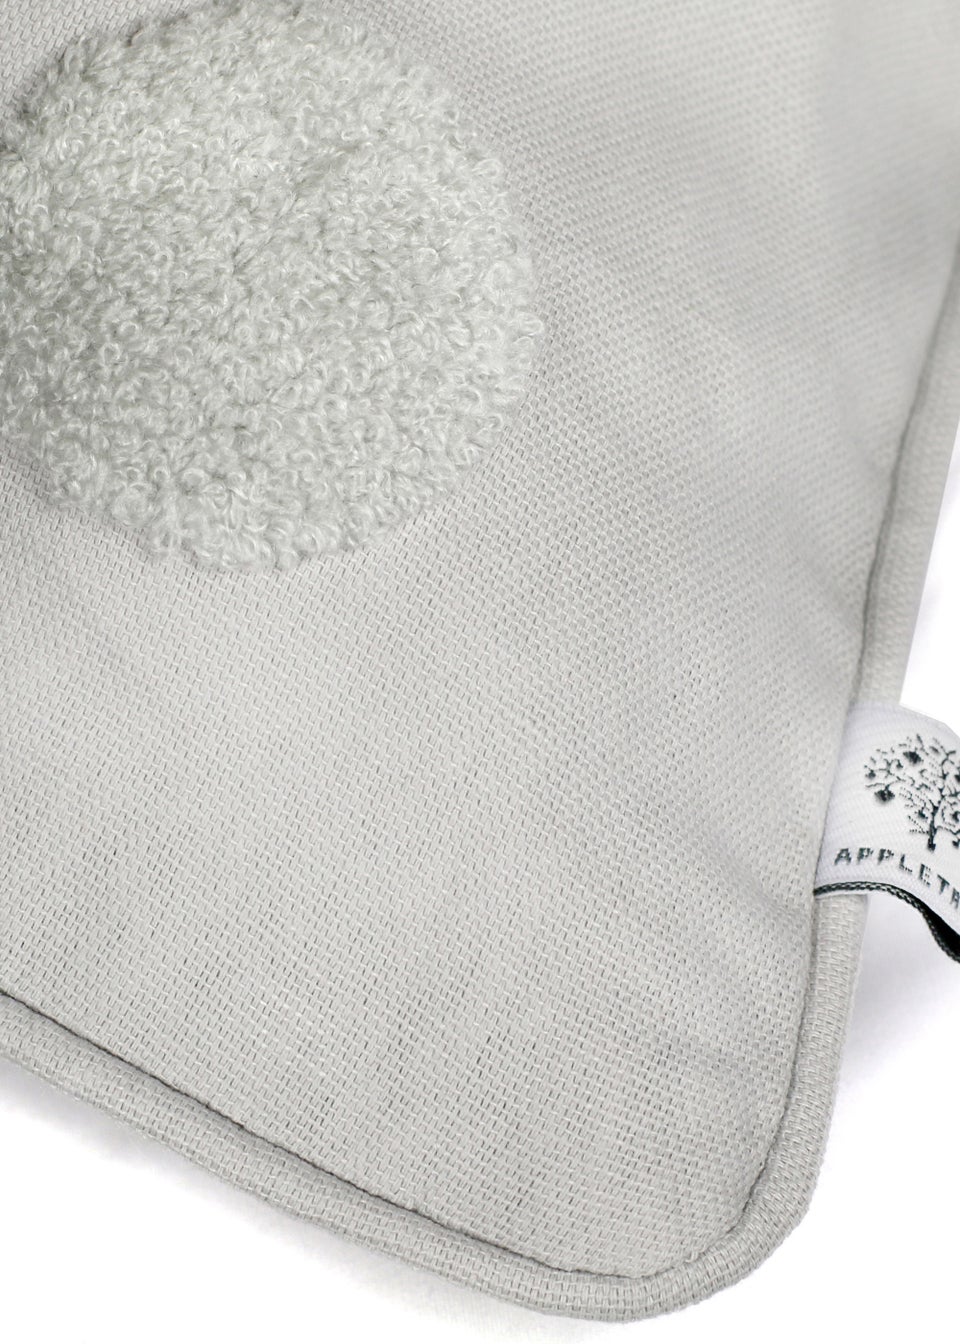 Appletree Boutique Zara Tufted Spots Filled Cushion (43cm x 43cm)